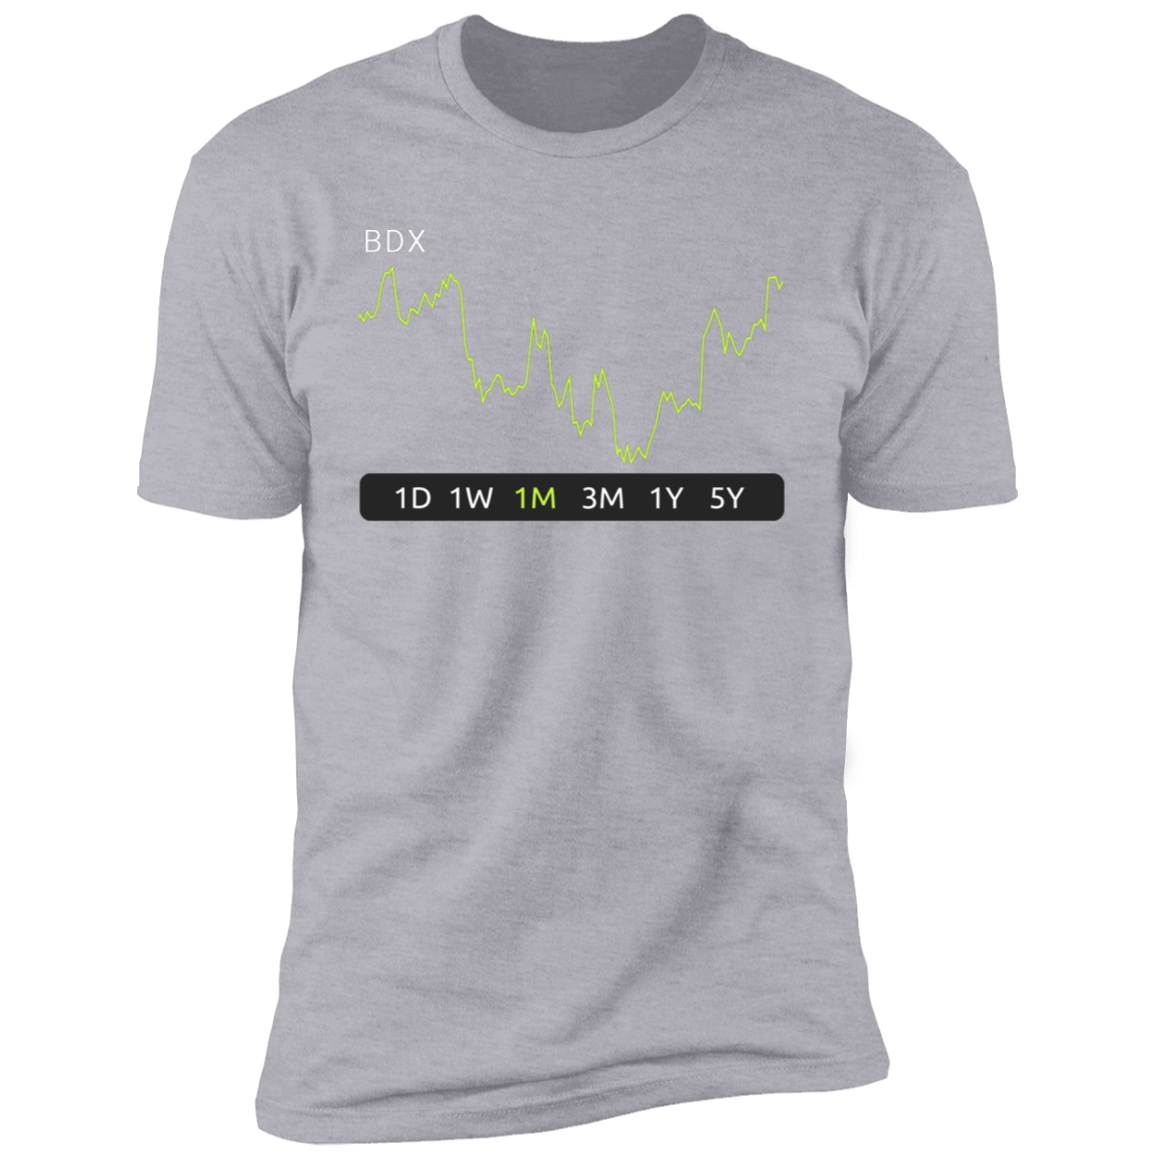 DBX Stock 1m Premium T-Shirt